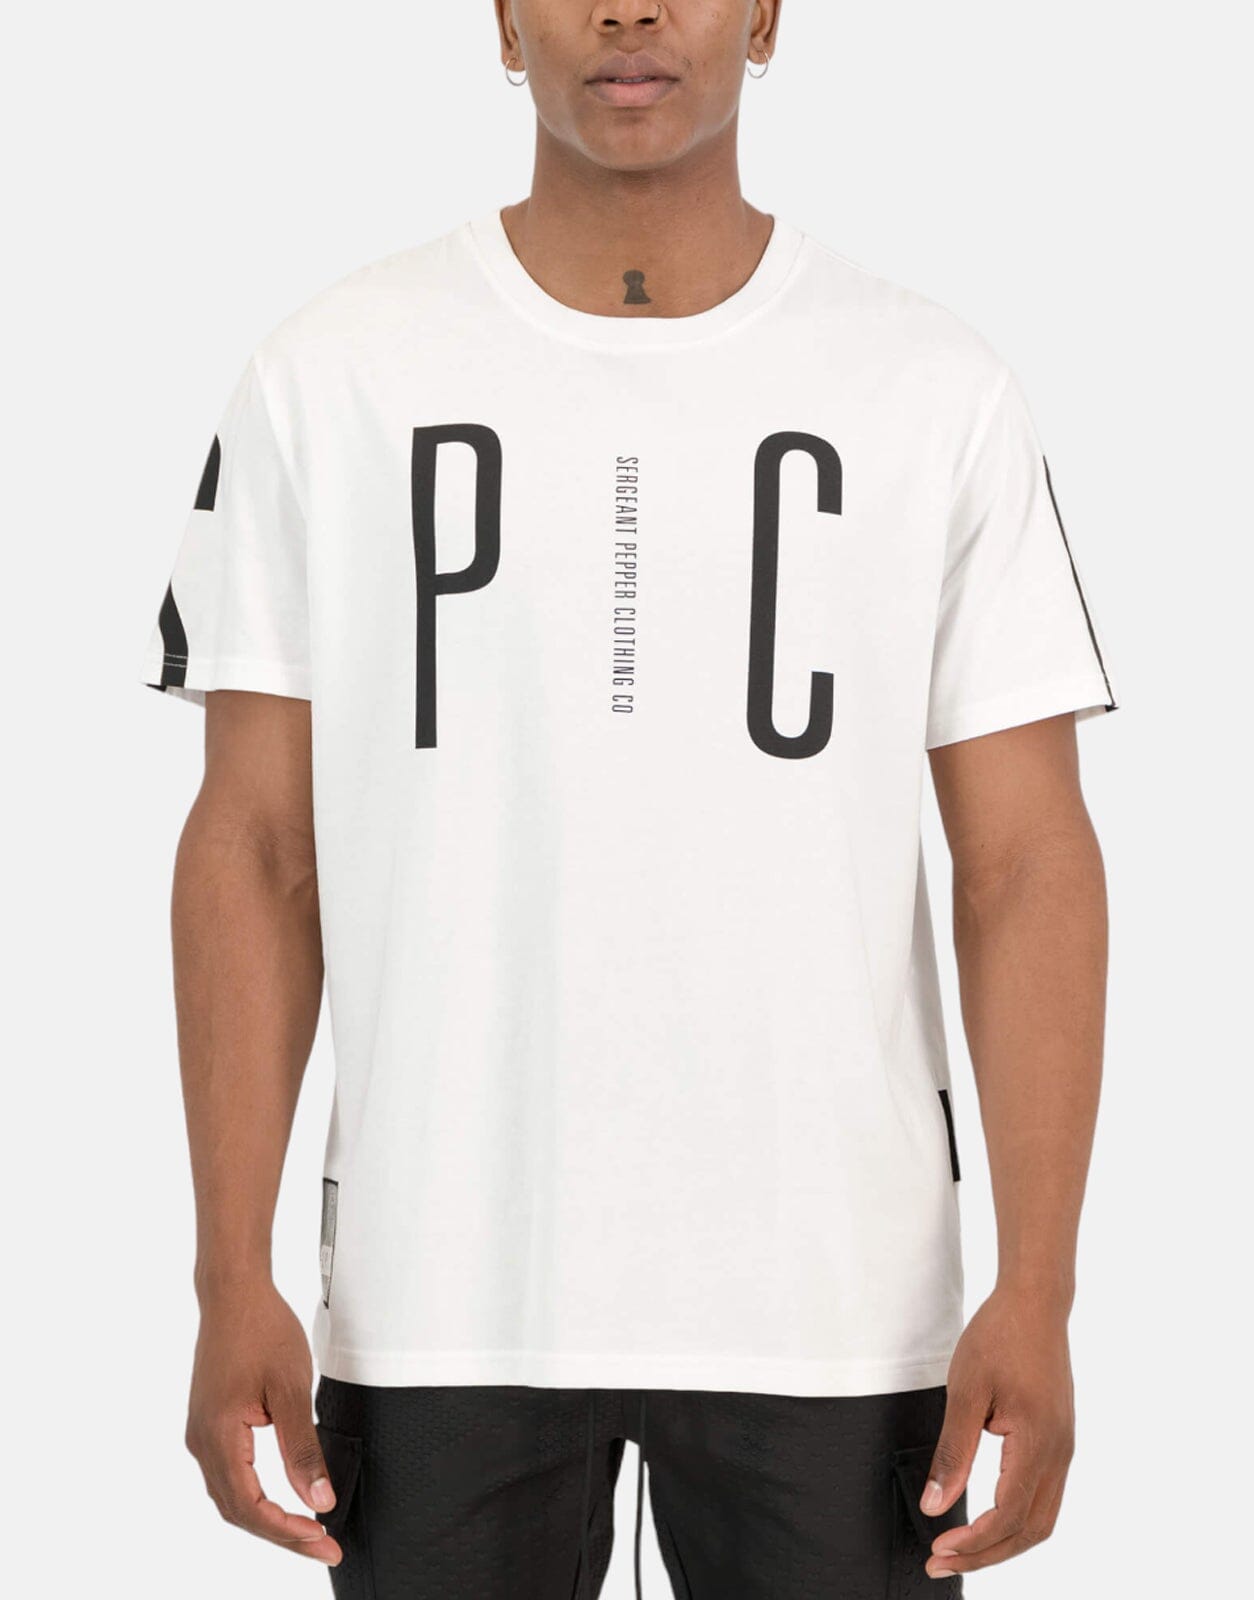 SPCC Devlin White T-Shirt - Subwear